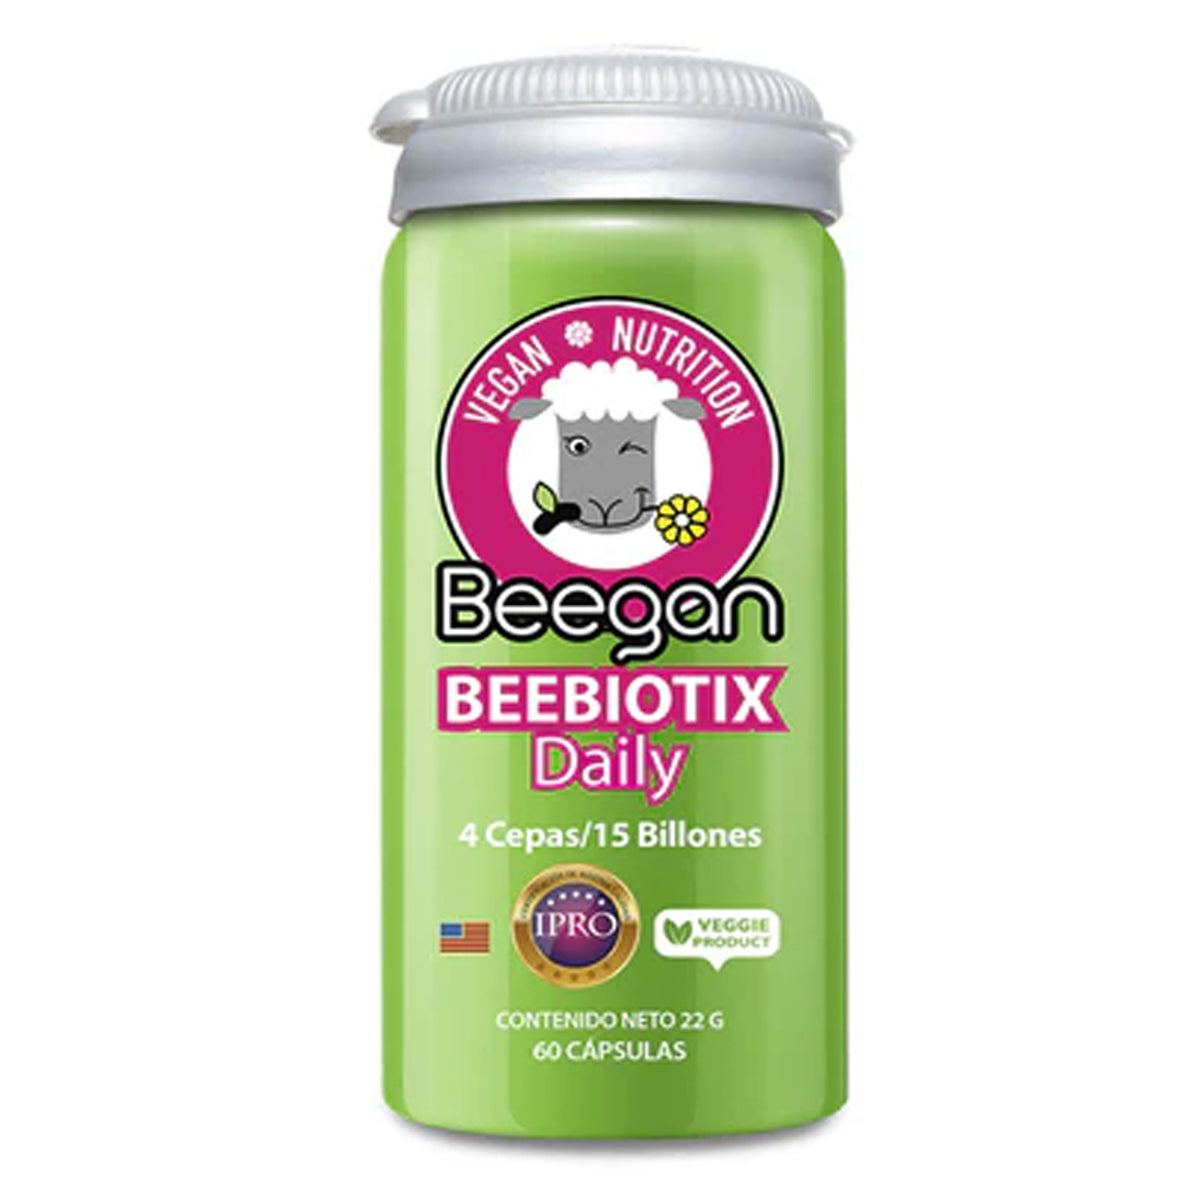 Beegan Beebiotix Daily Vegano Cápsulas